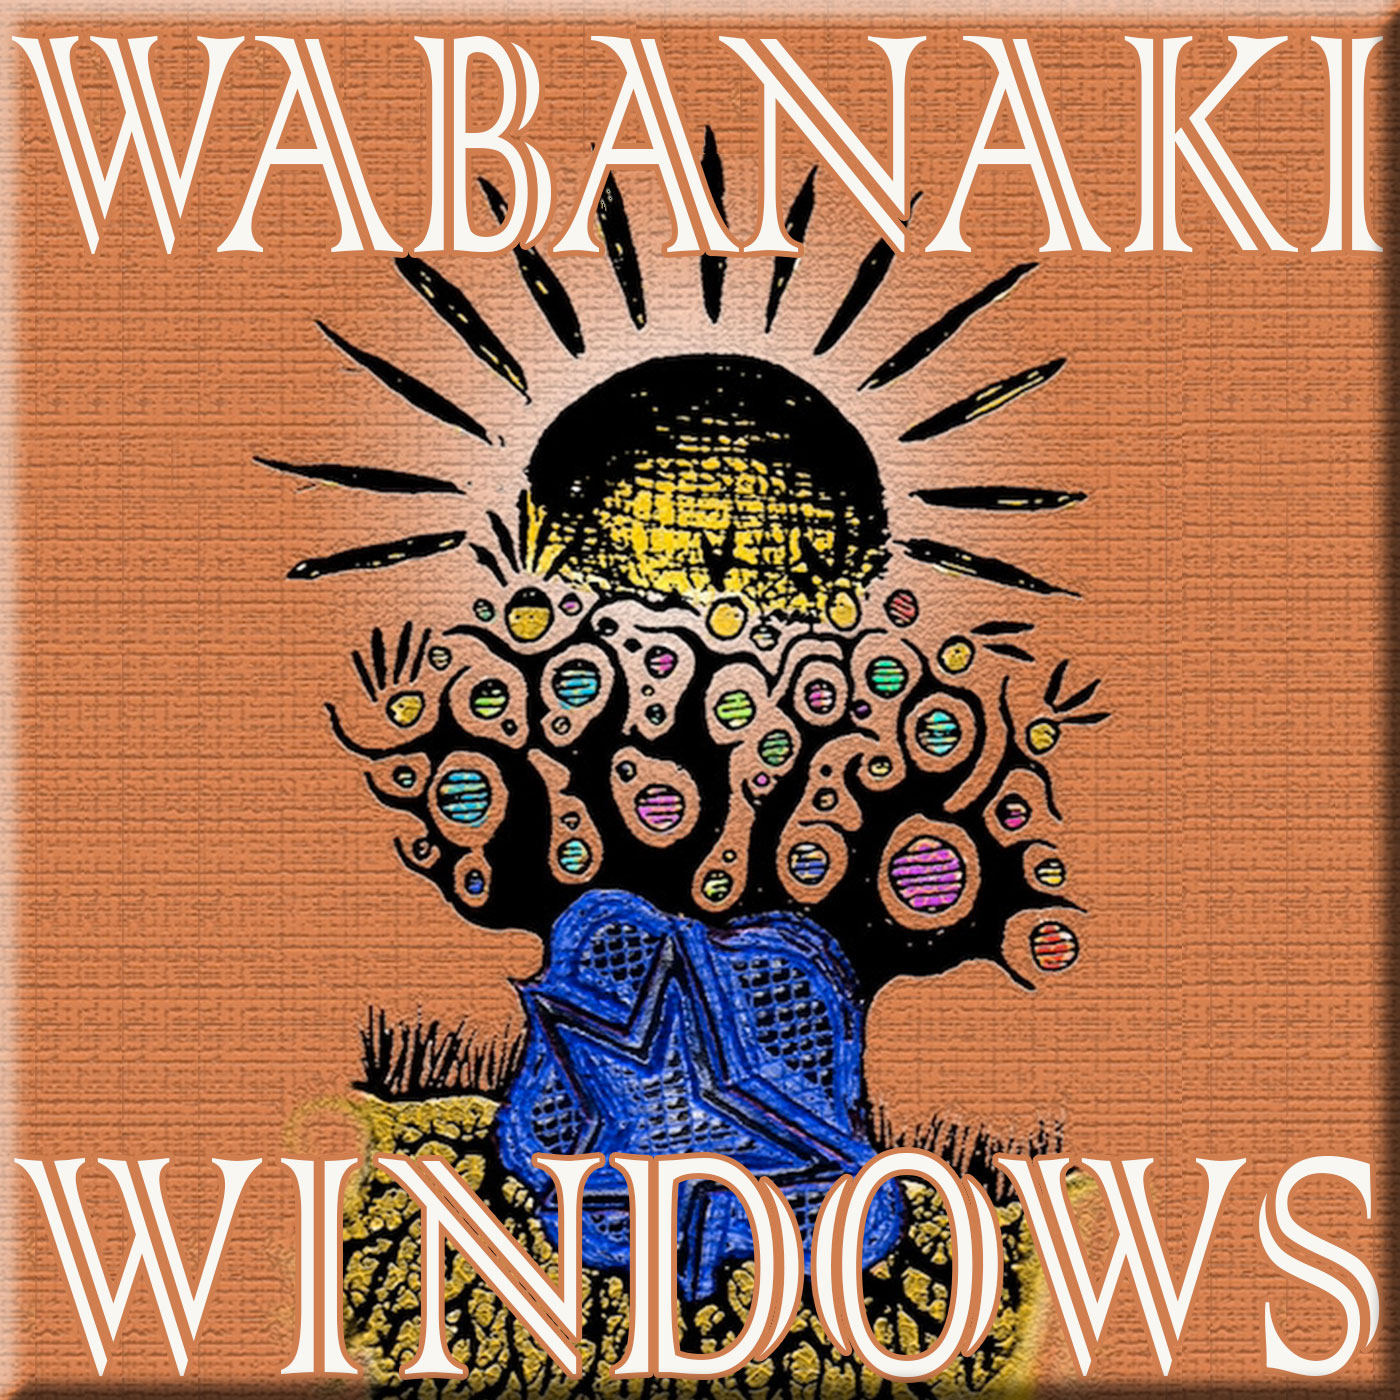 Wabanaki Windows 7/20/23: ICE The Ralph Proctor Transcript, Part I